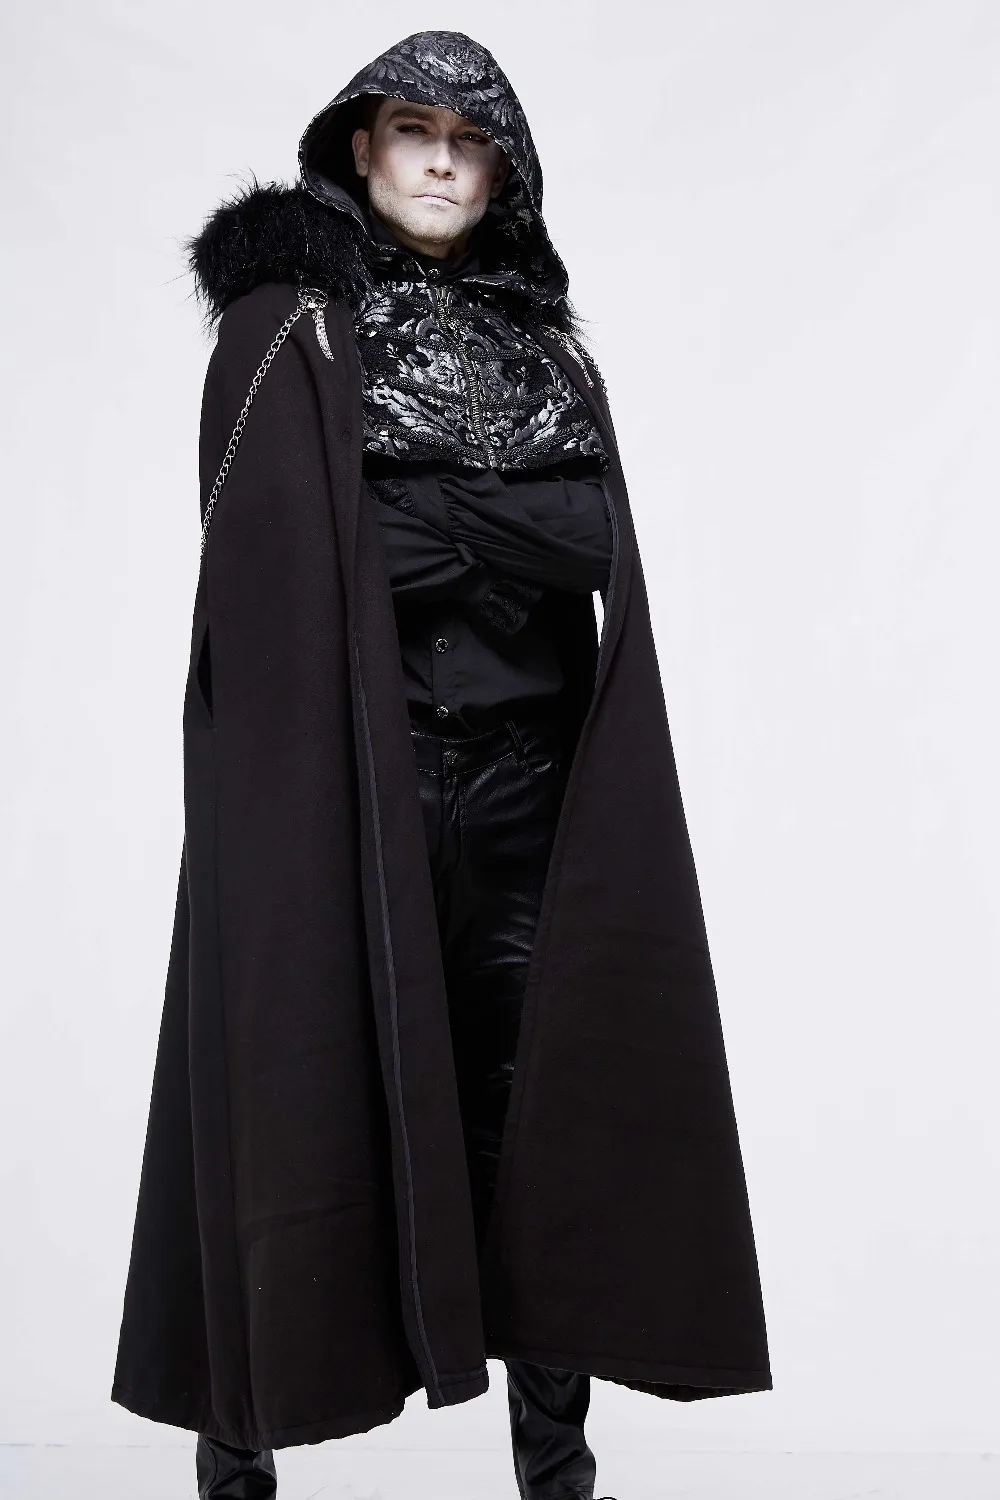 Devil Fashion Mens Gothic Hooded Cloak Cape Coat Red Black Jacquard Damask Steampunk Regency Aristocrat LARP